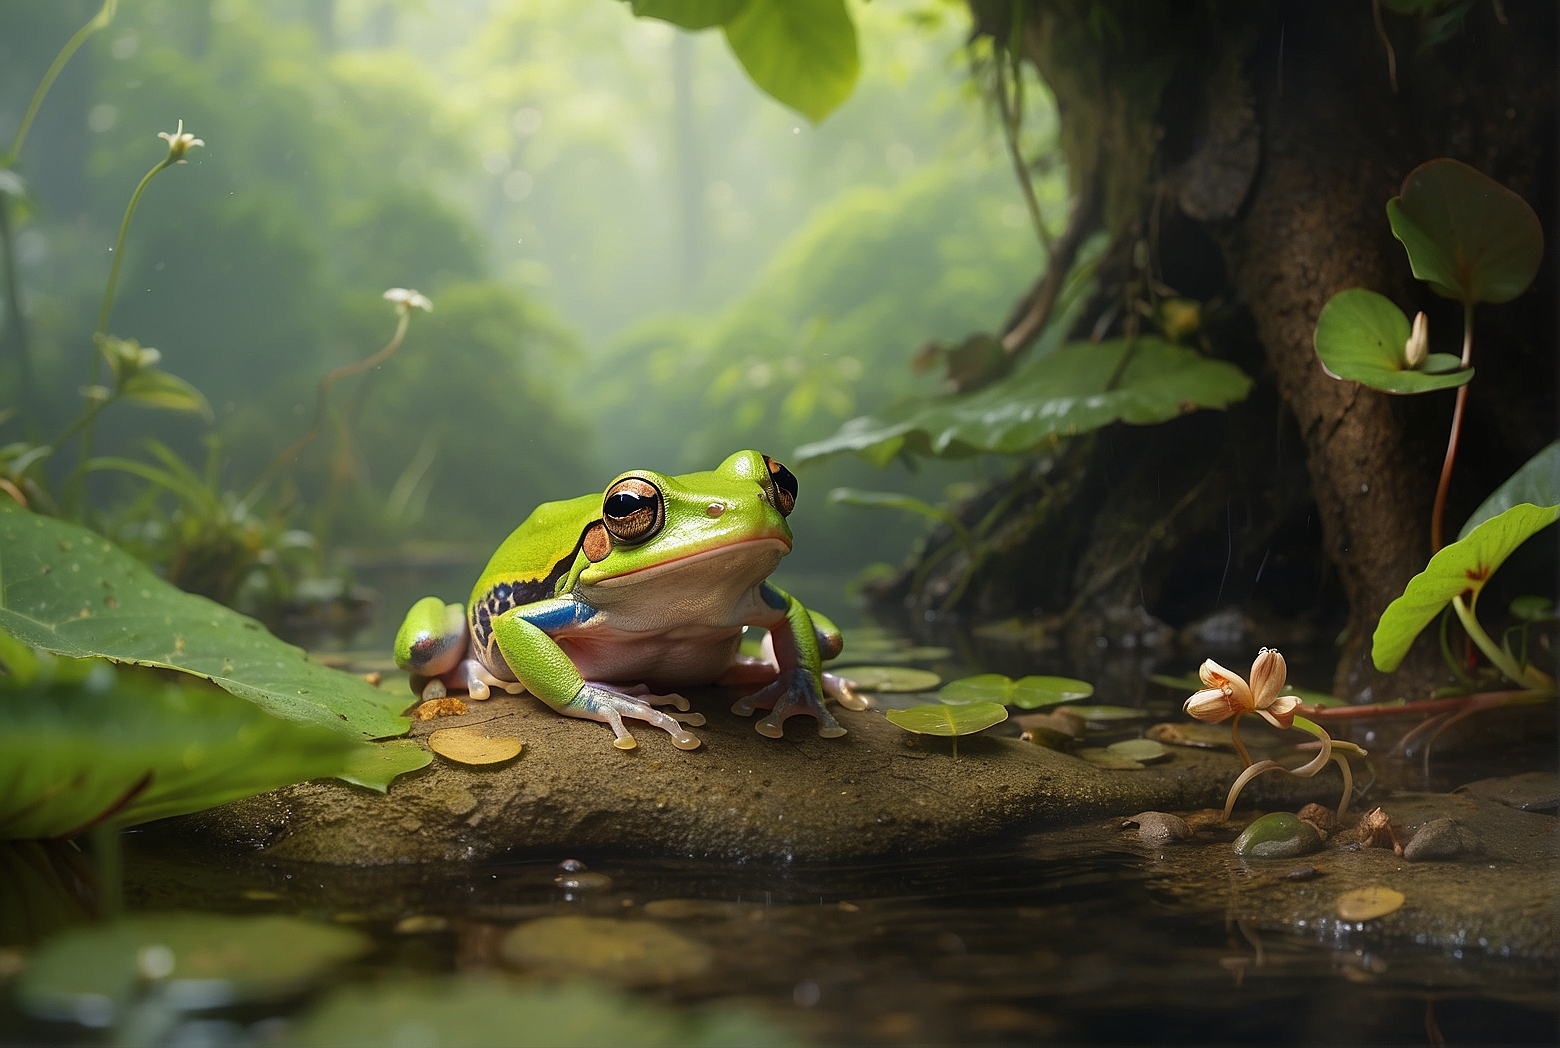 Habitat of Tree Frogs